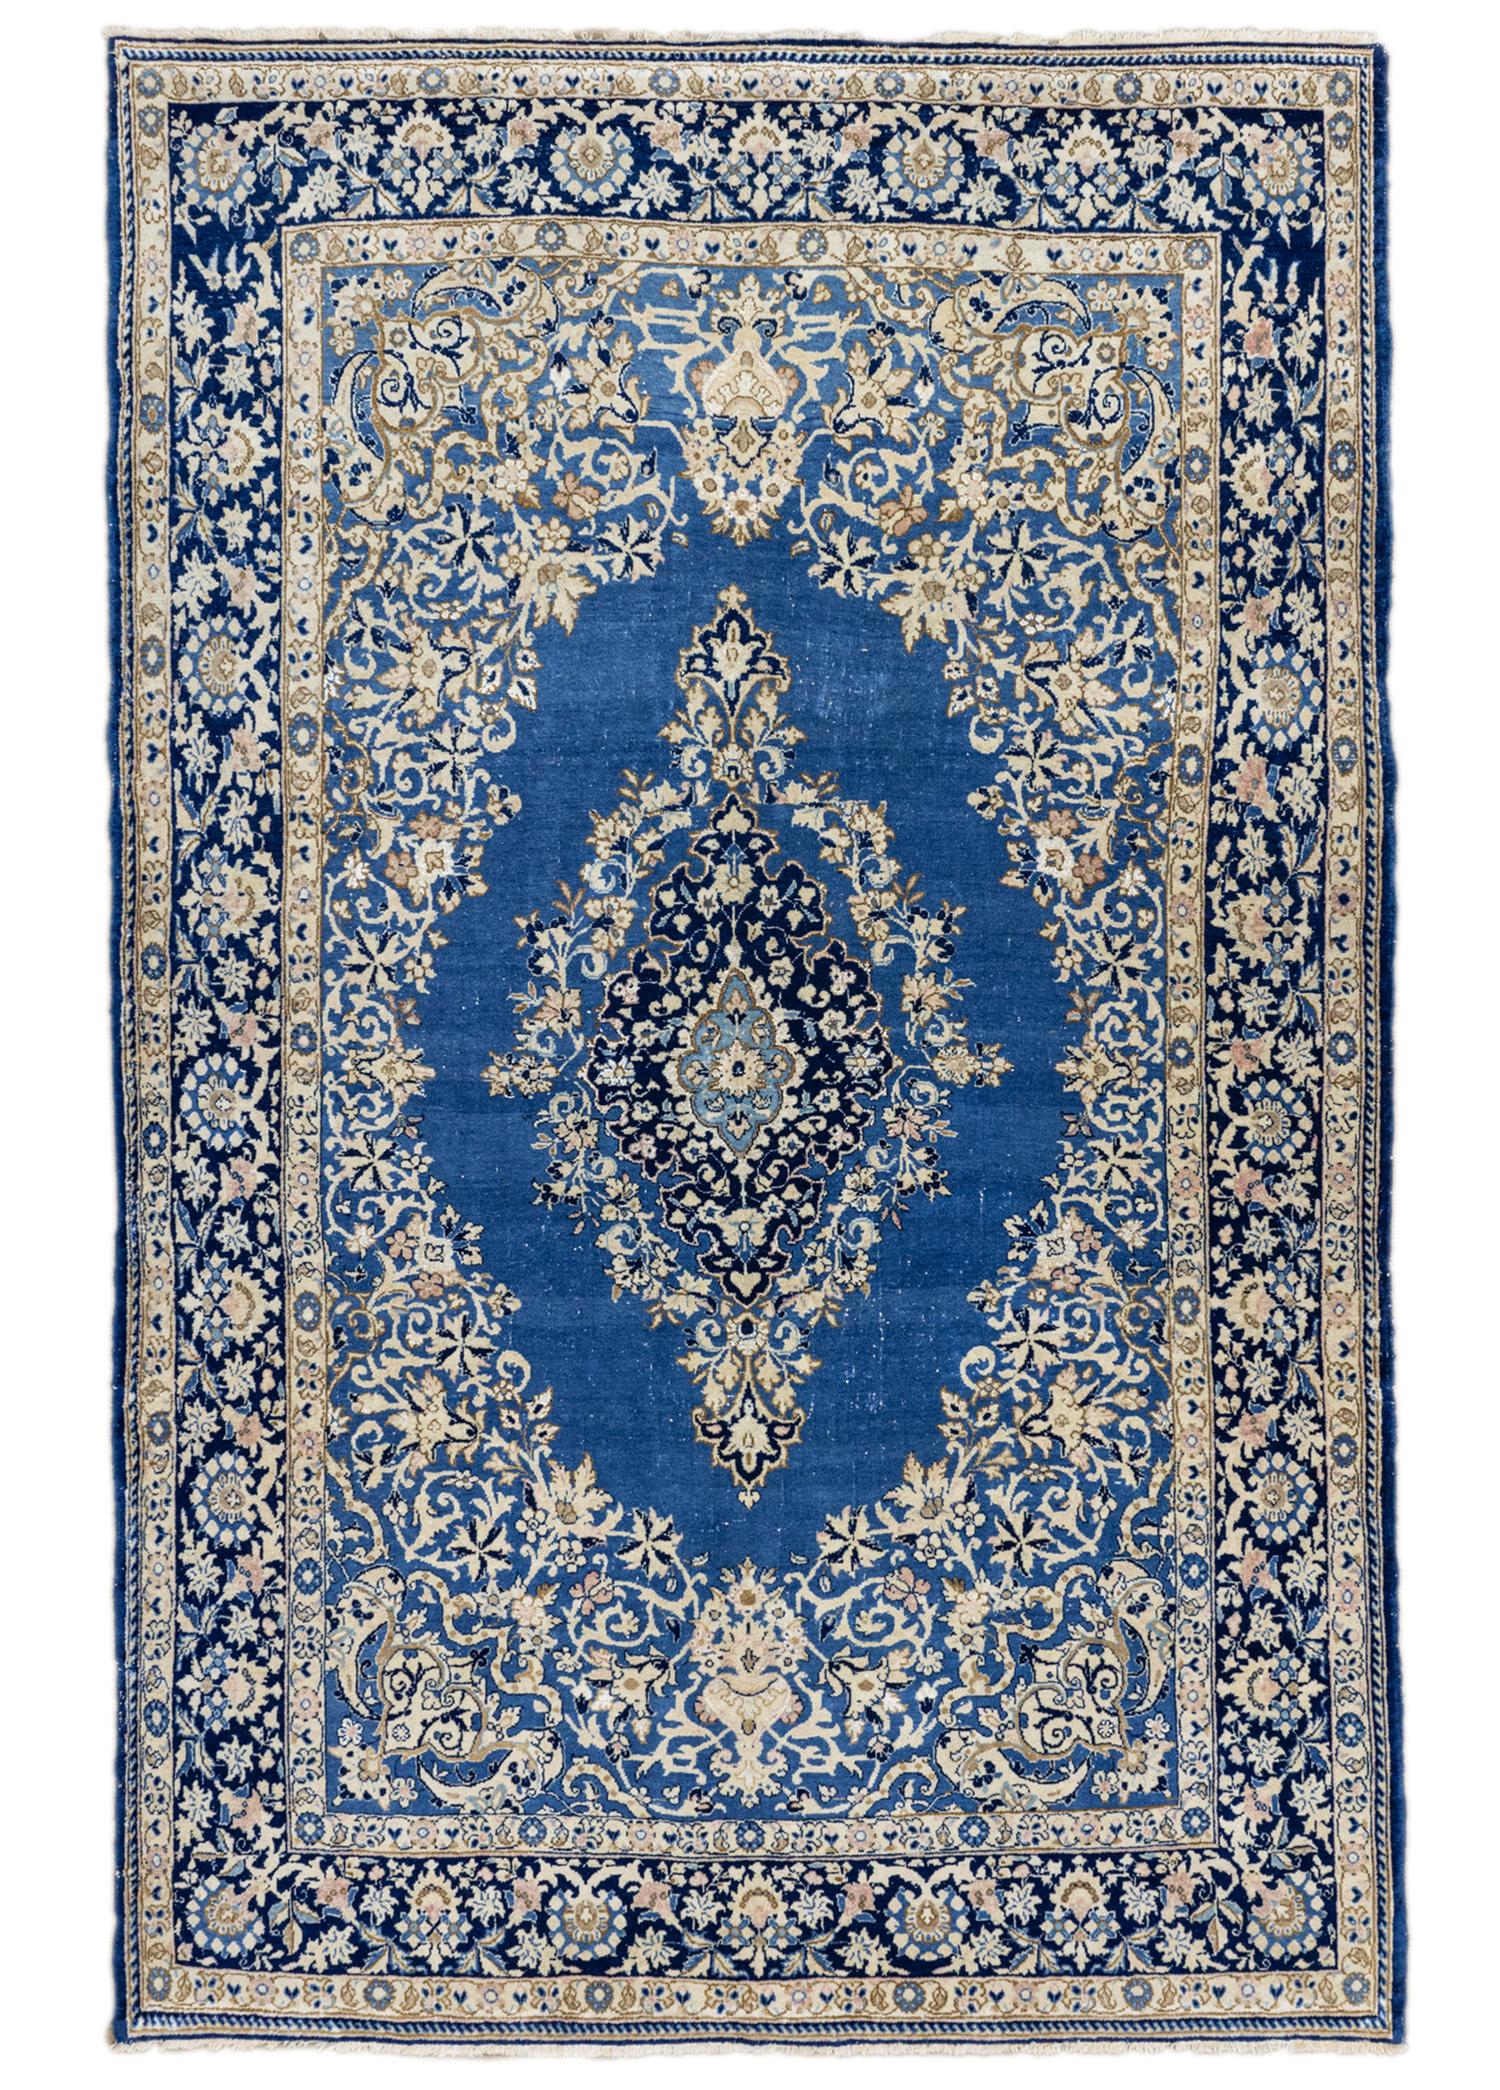  Alvand Medallion Patterned Handwoven Persian Carpet 157x246 cm